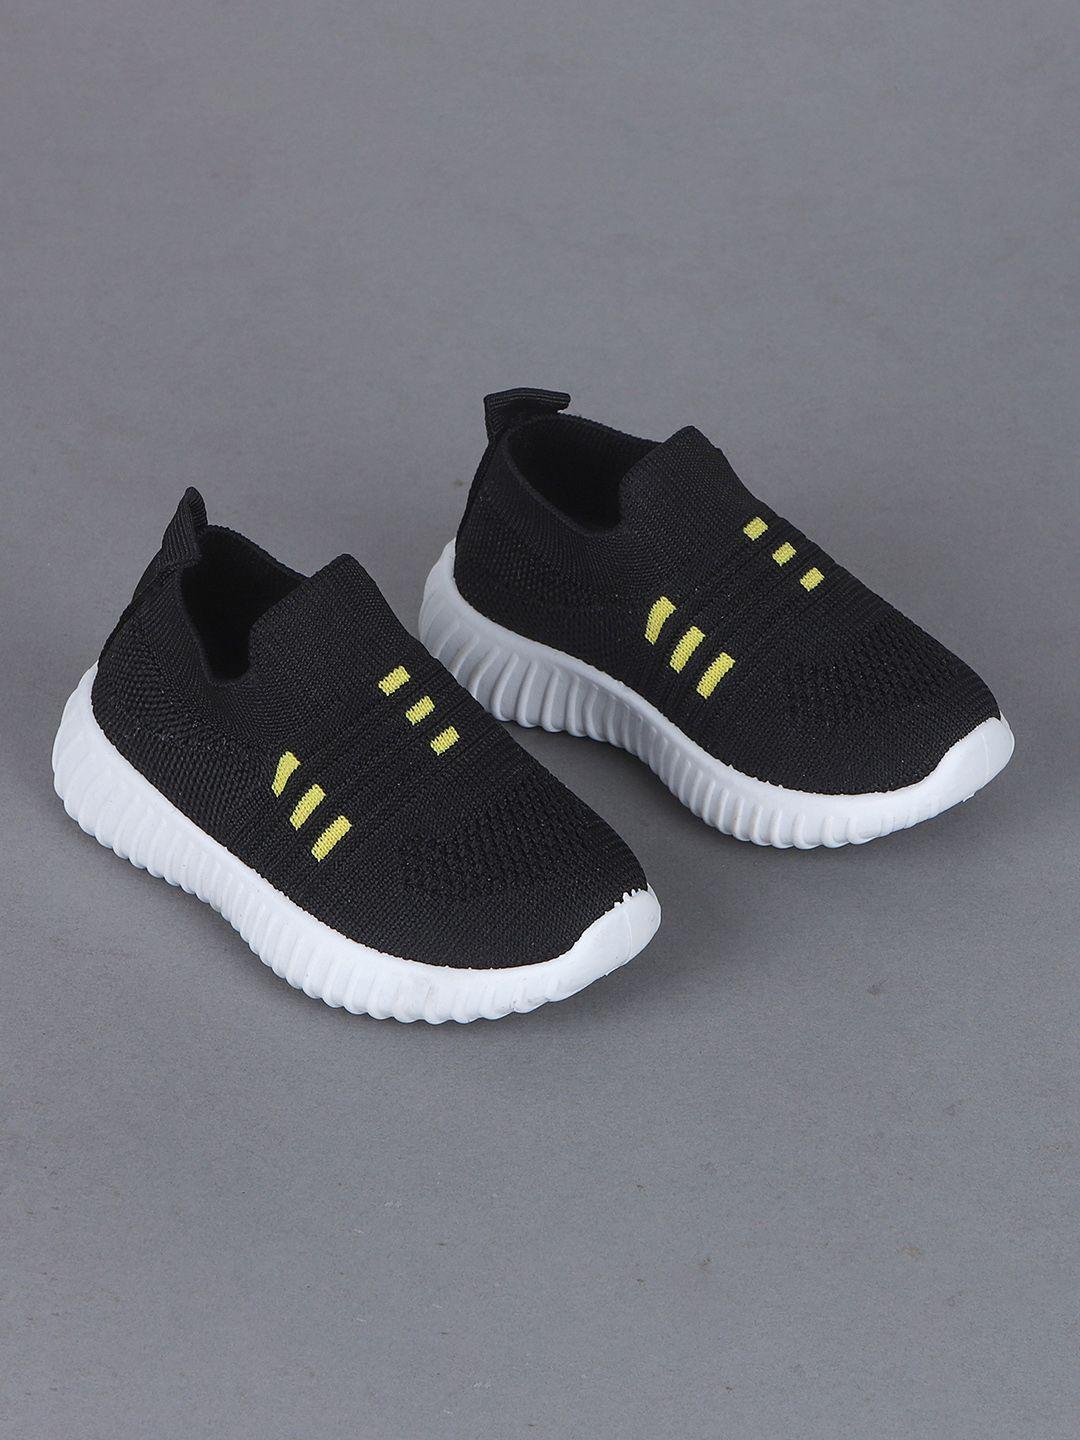 feetwell shoes unisex kids black woven design slip-on sneakers